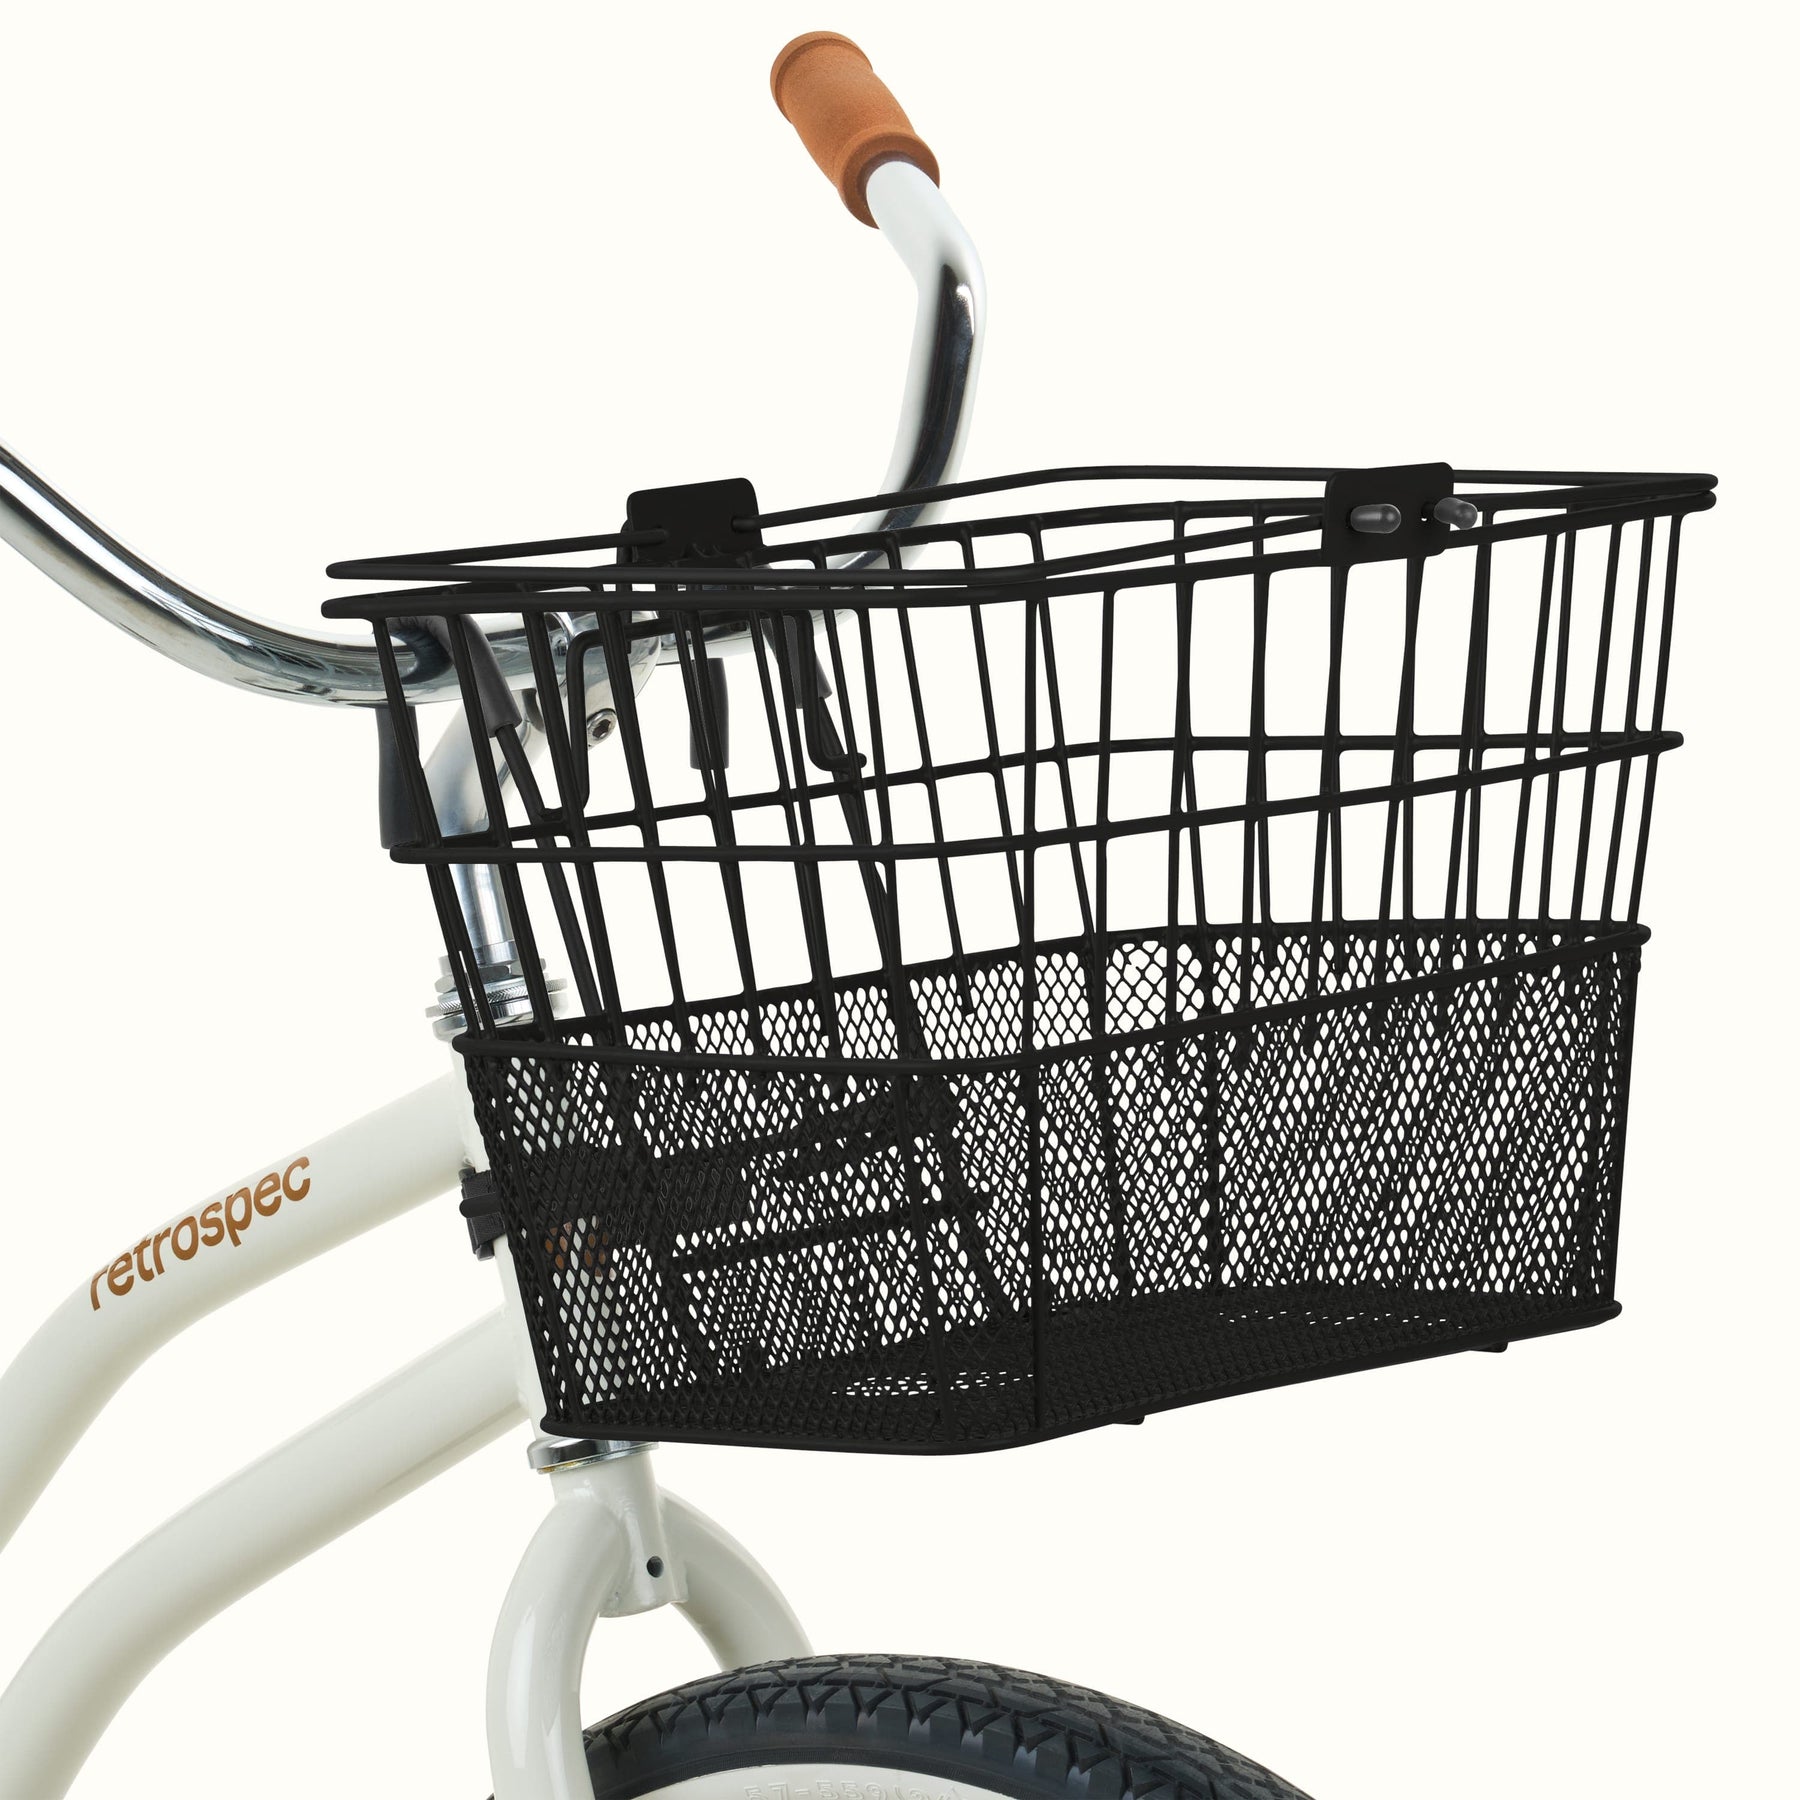 Retrospec Detachable Bike Basket